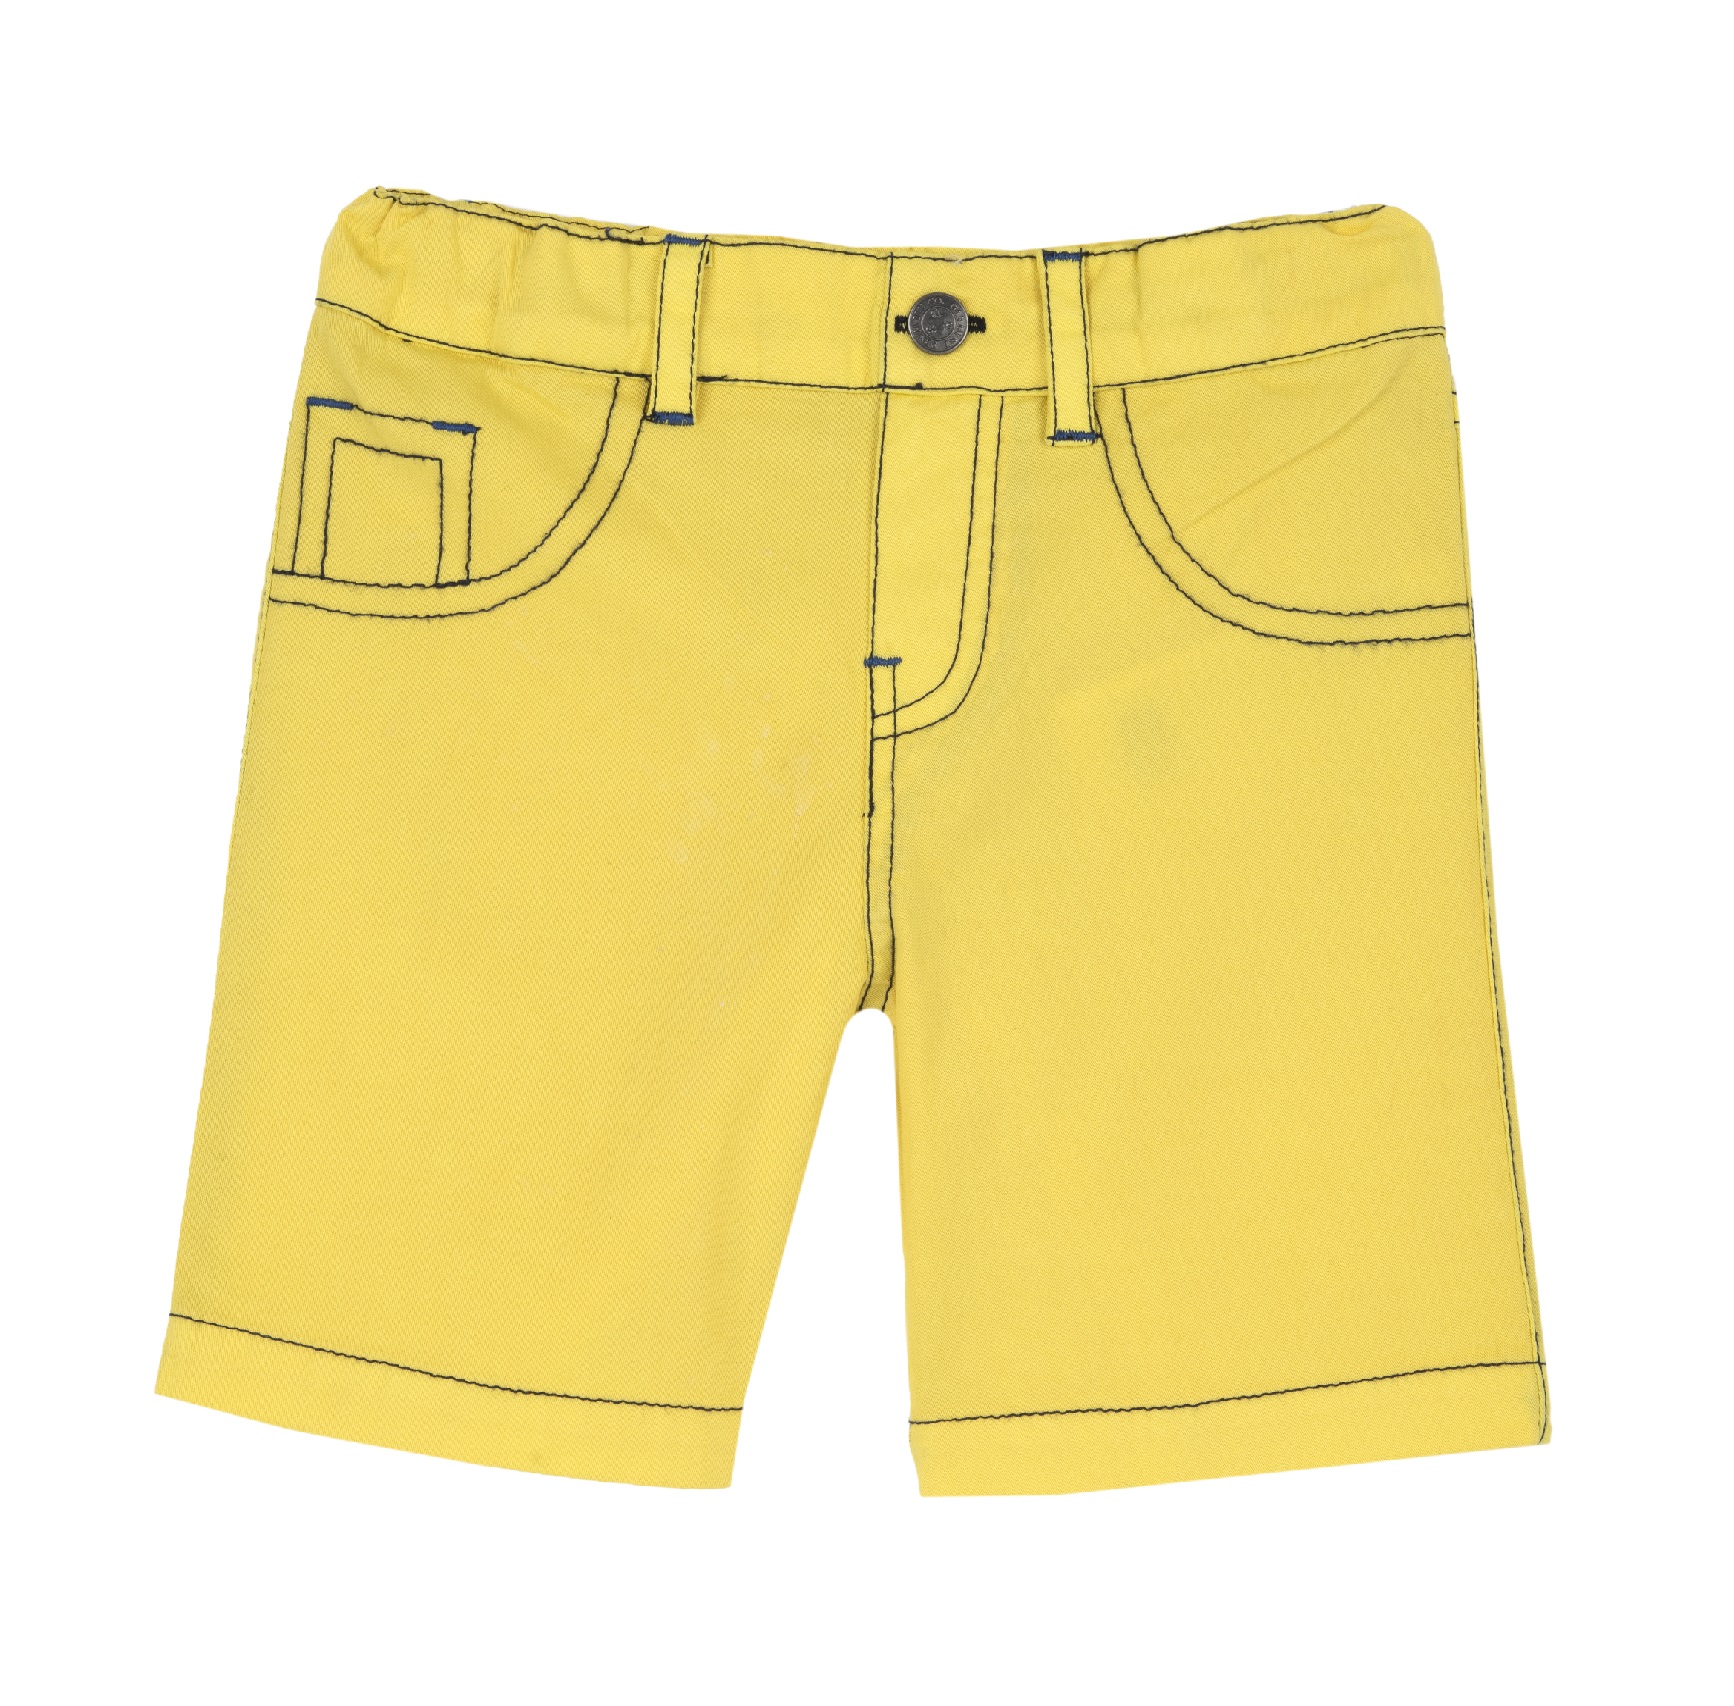 Pantaloni scurti copii Chicco Twill, galben, 00568-64MC Pantaloni copii